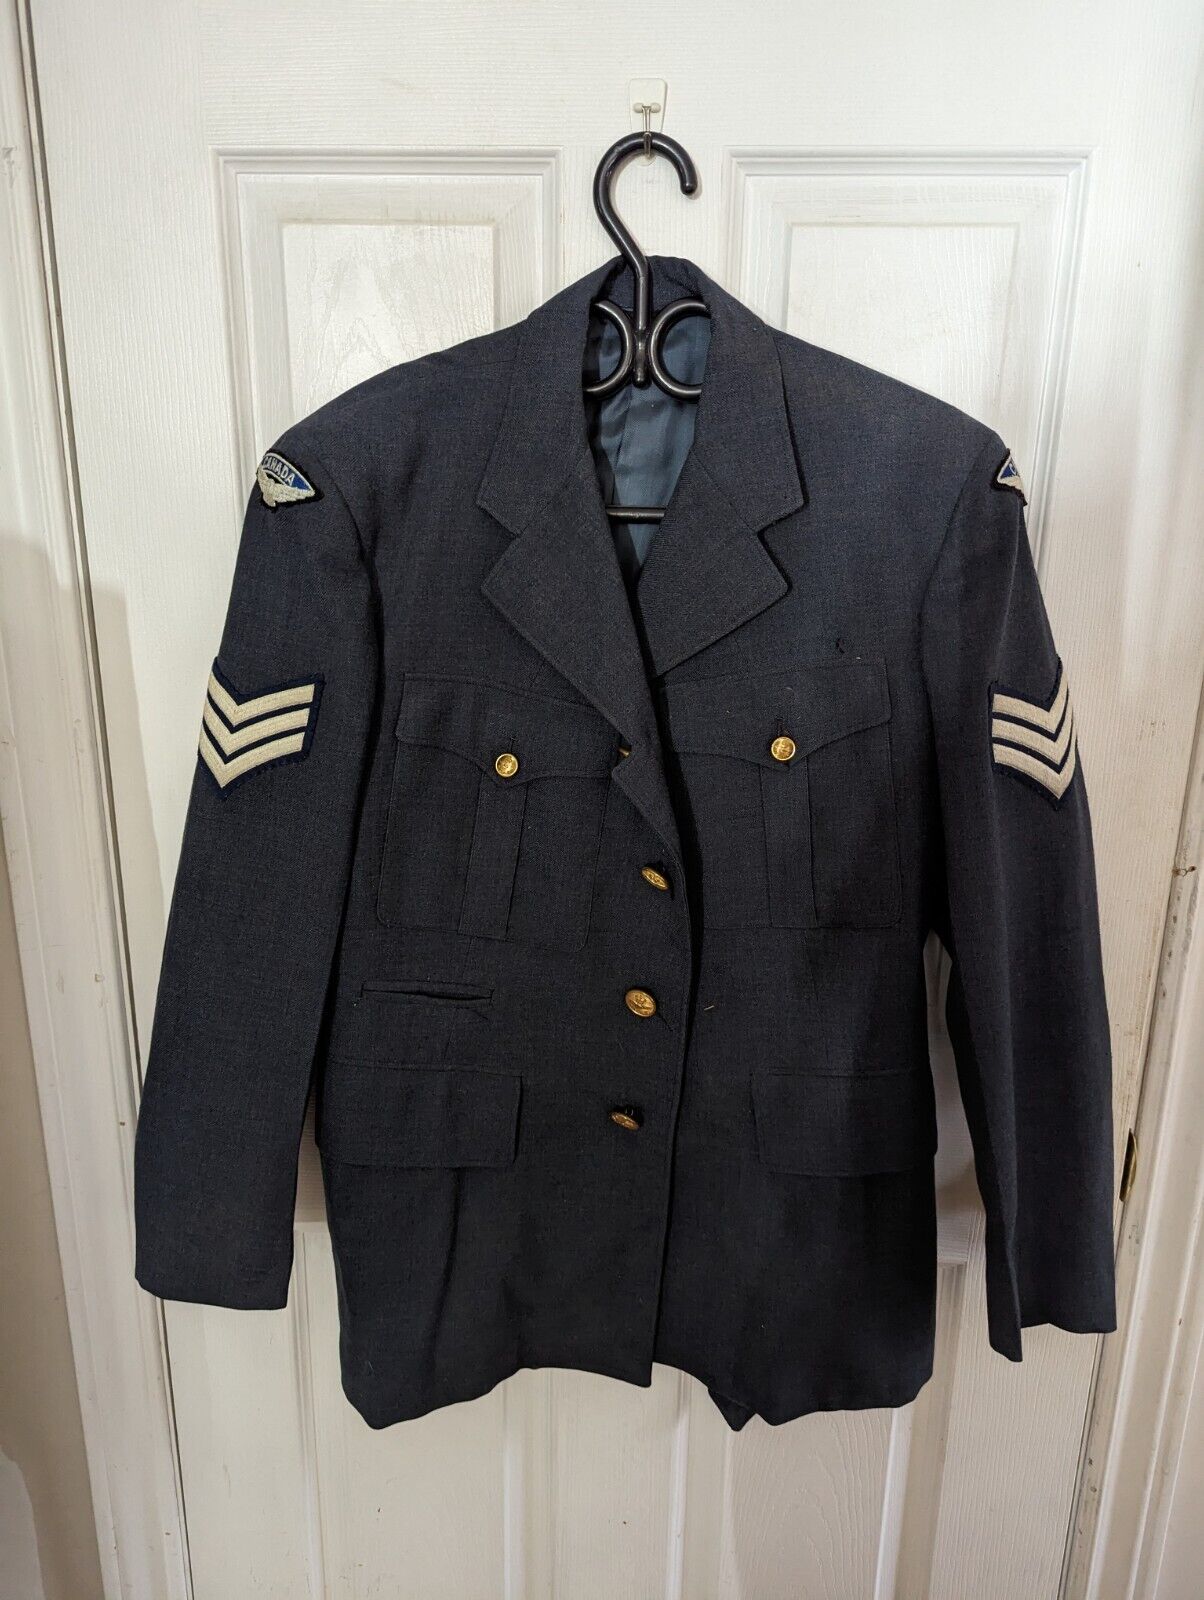 1952 RCAF Royal Canadian Air Force Uniform Jacket & Pants